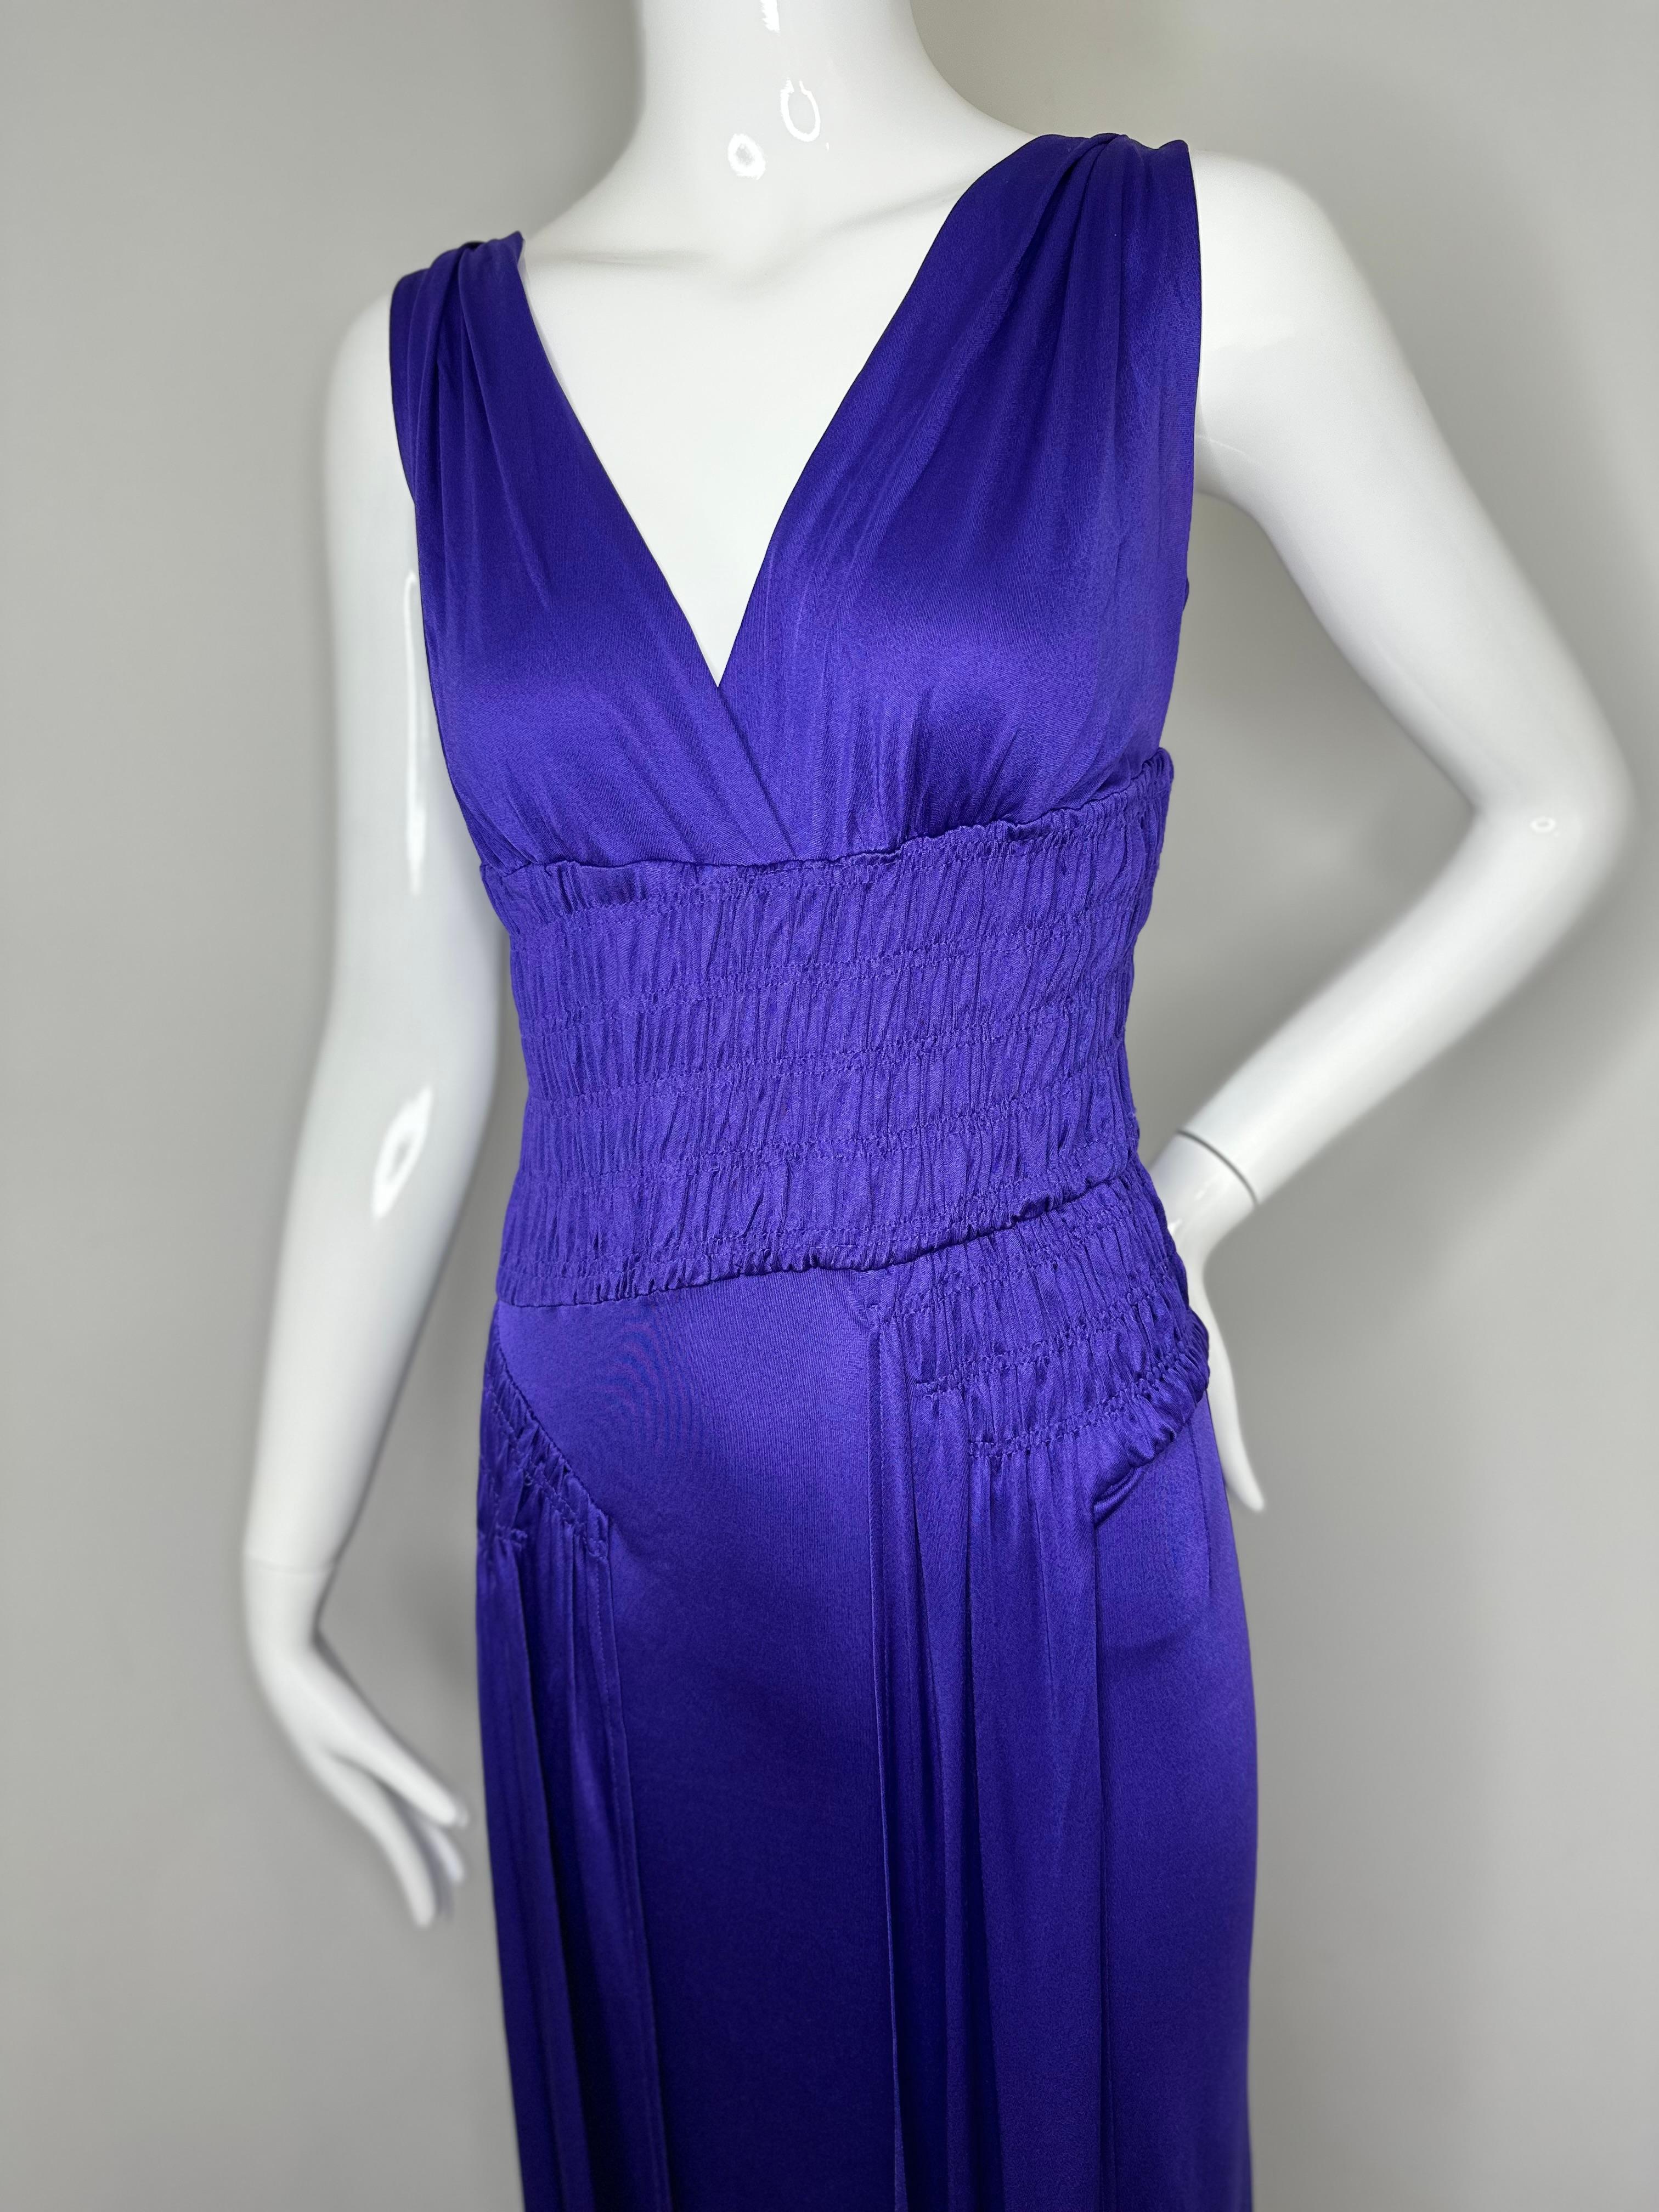 Christian Dior by John Galliano 2009 purple maxi dress For Sale 1